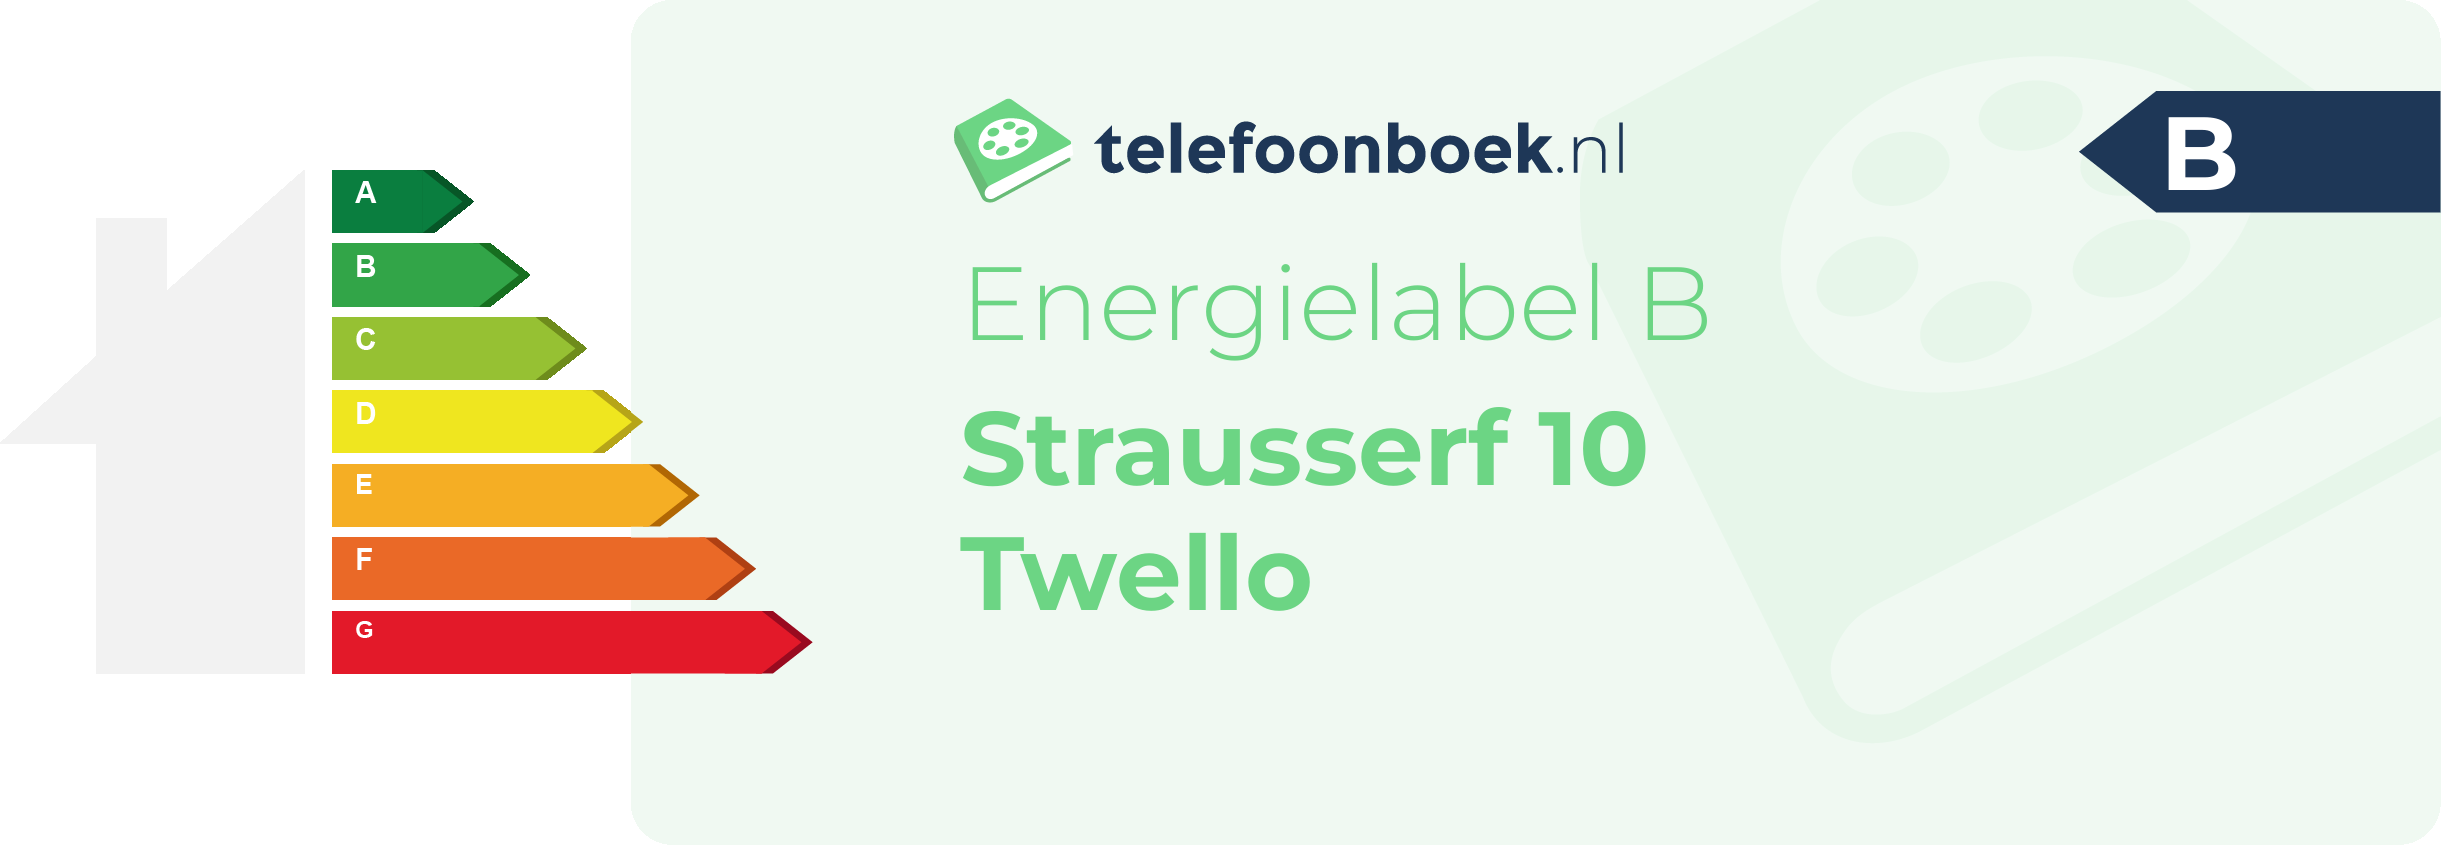 Energielabel Strausserf 10 Twello